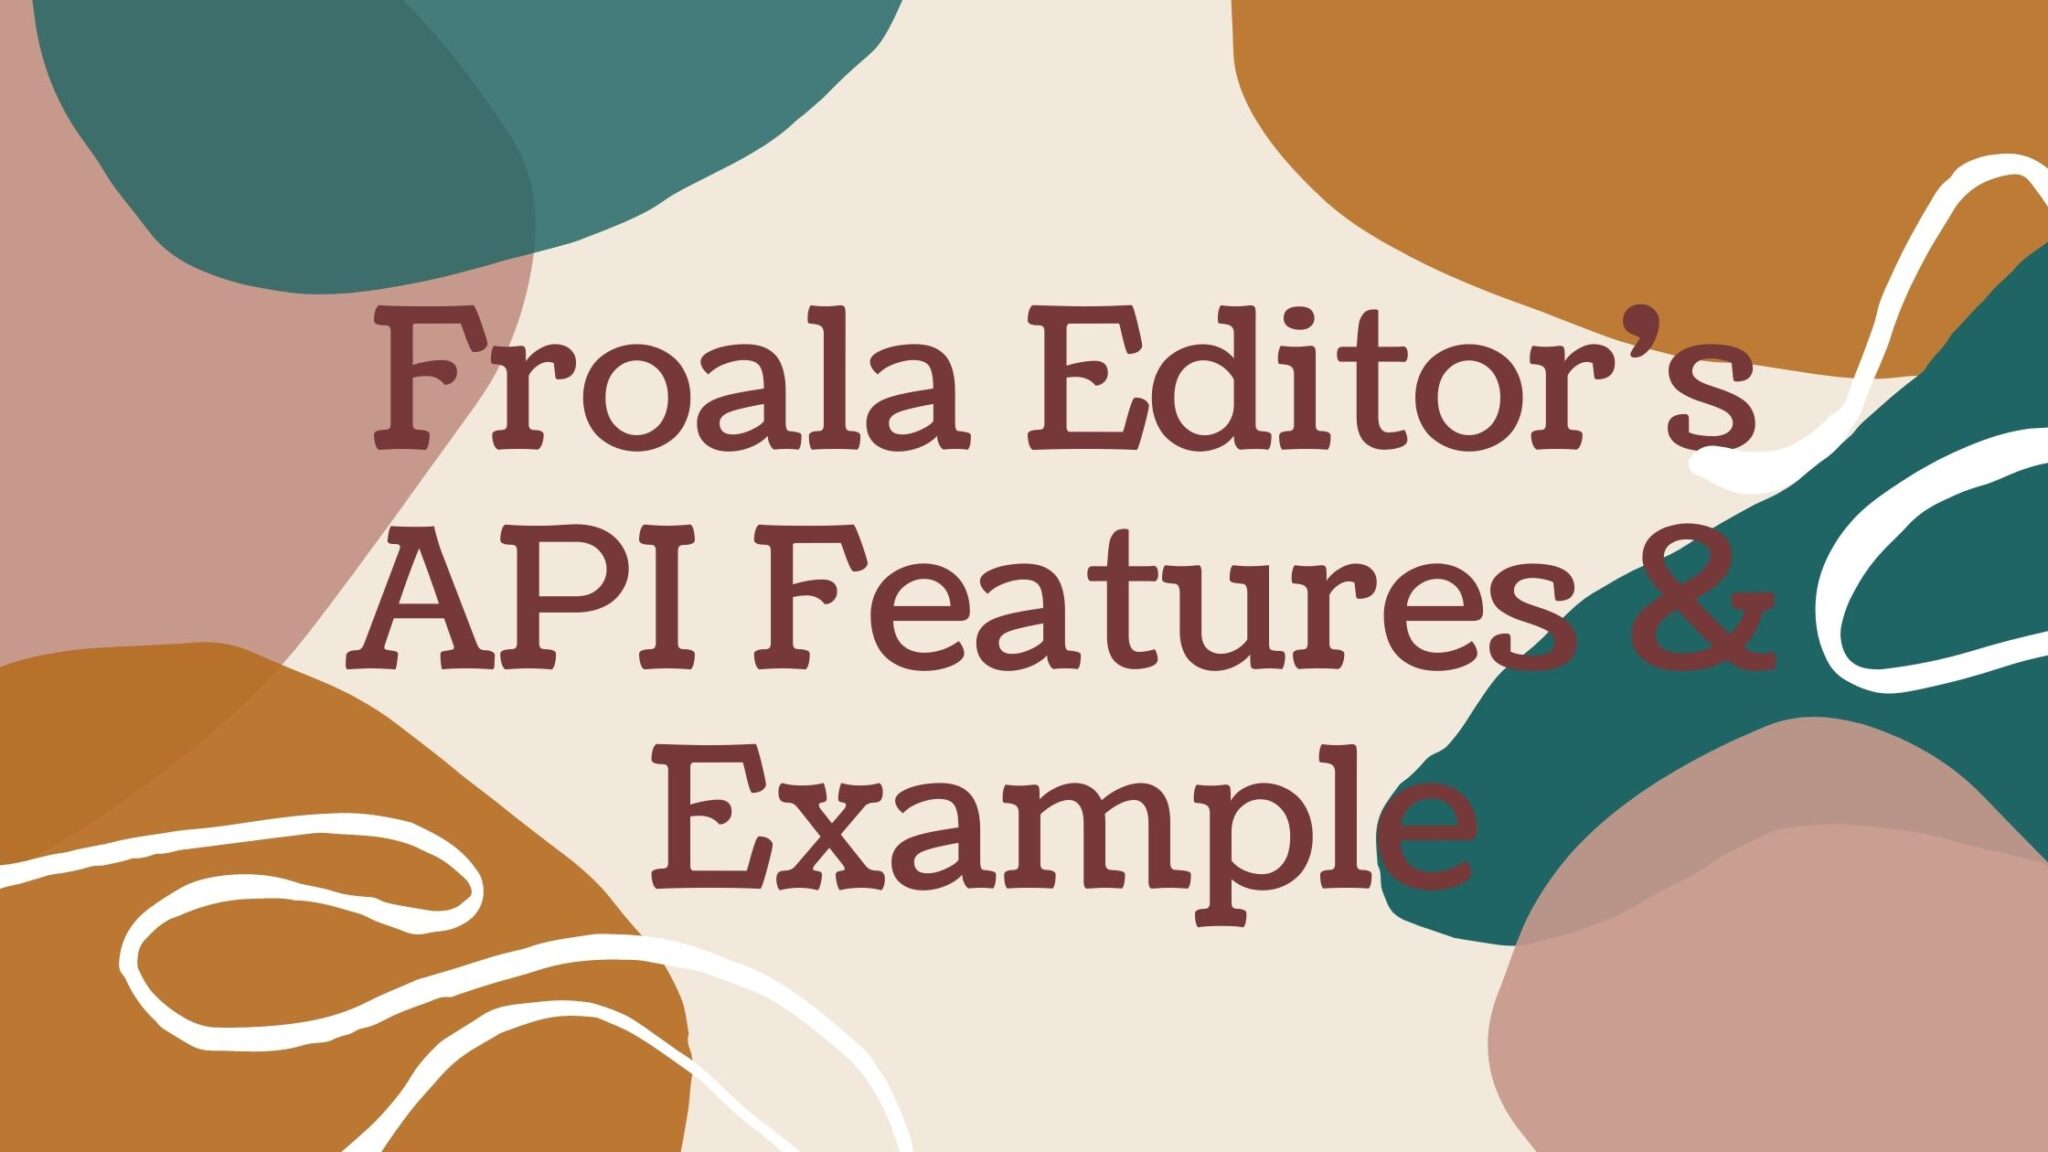 Froala-Editor's-API-Features-&-Example